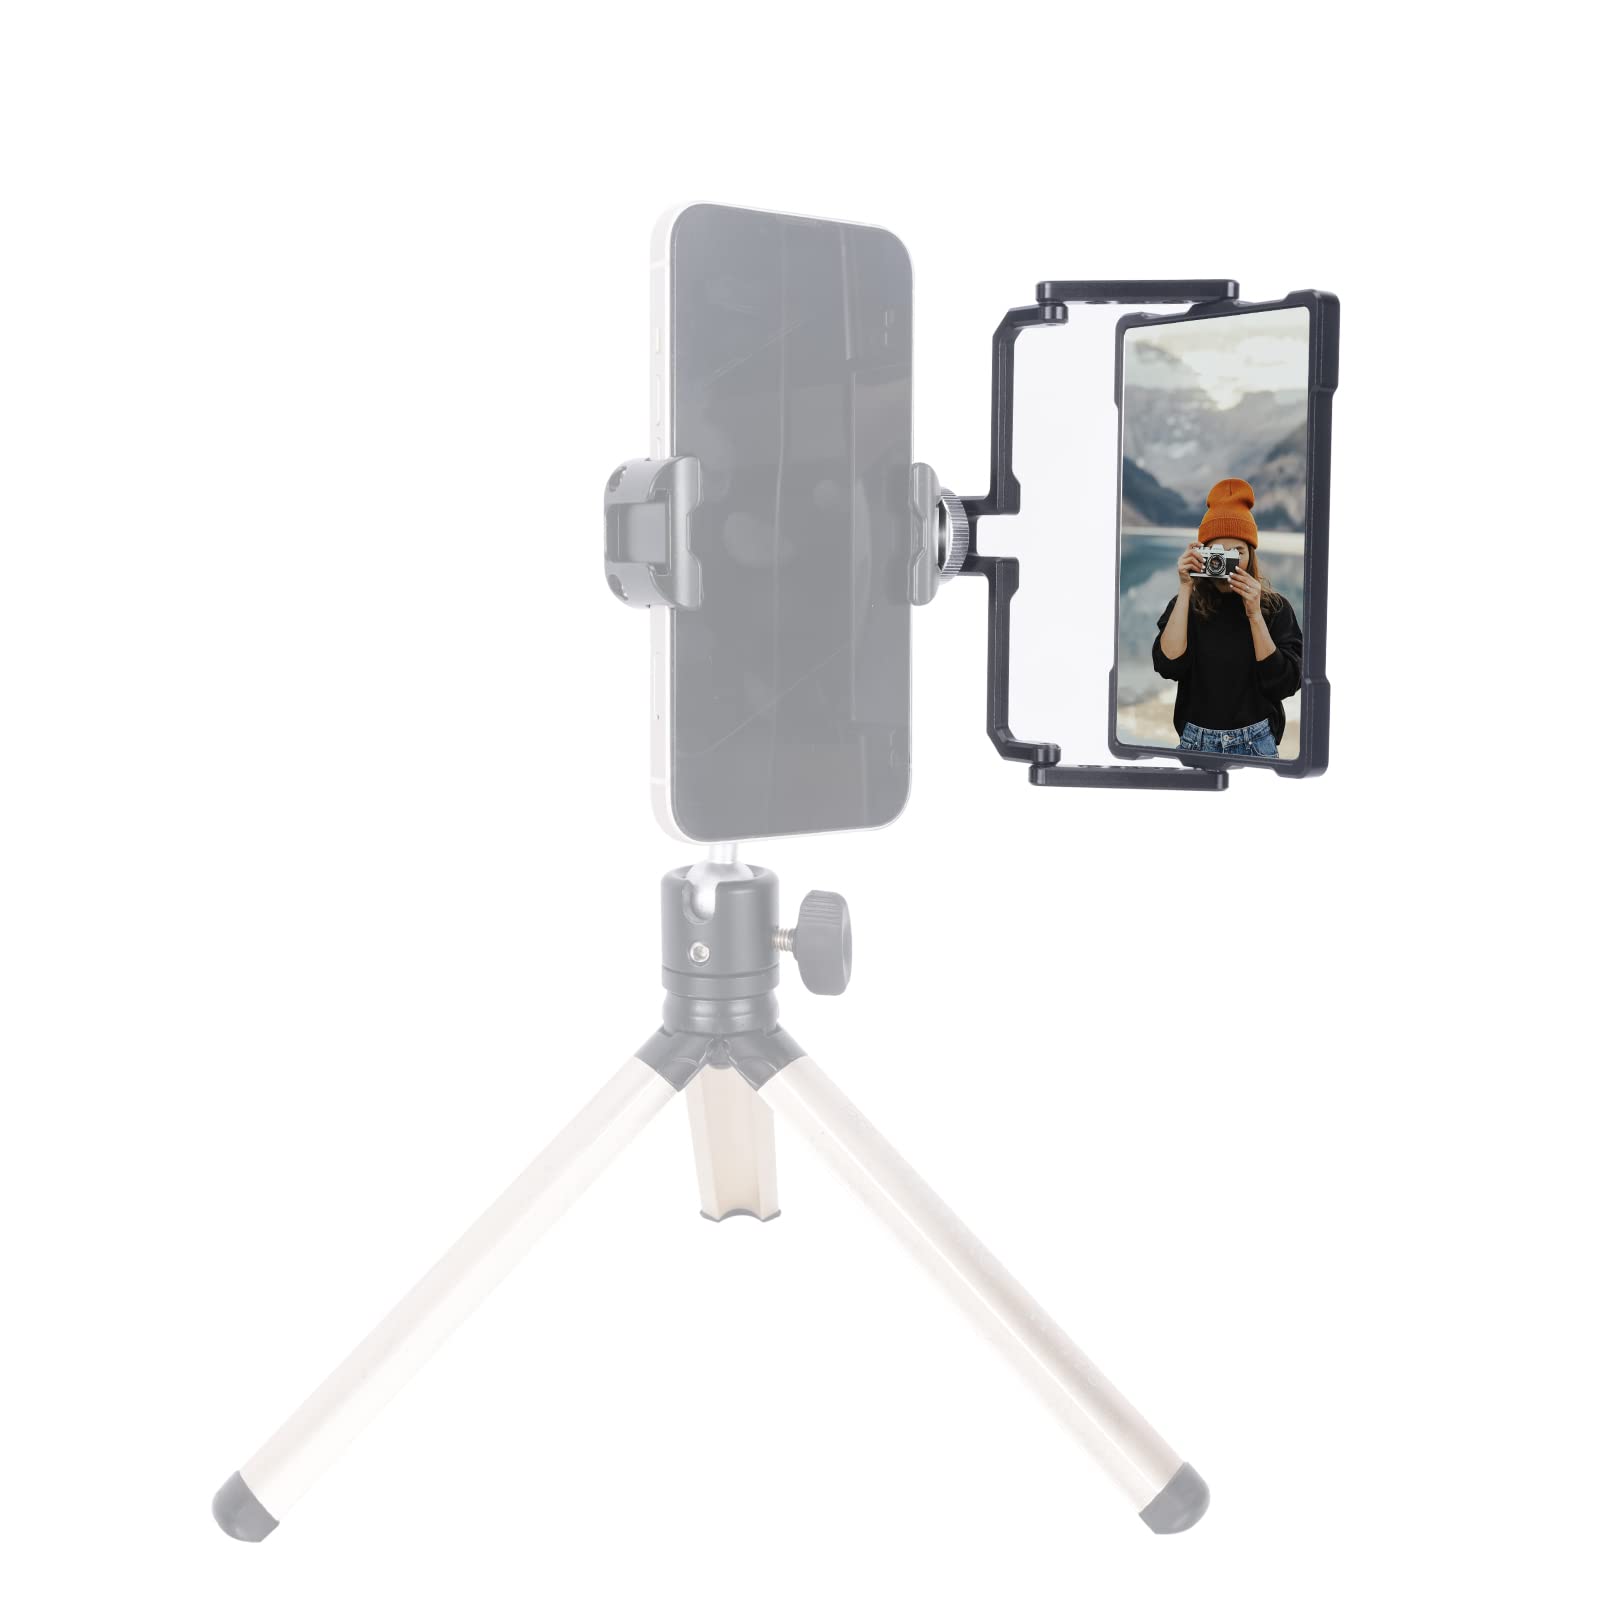 NICEYRIG 自撮りモニター スマホフリップスクリーンミラー 汎用スマートフォン反射ミラー 360°回転可能 軽量 折り畳み式 アルミ材料 iPhone 14/13/12/11/XS Pro/Samsung Galaxyに対応 自撮り用 アクセサリー（1件単品）-534